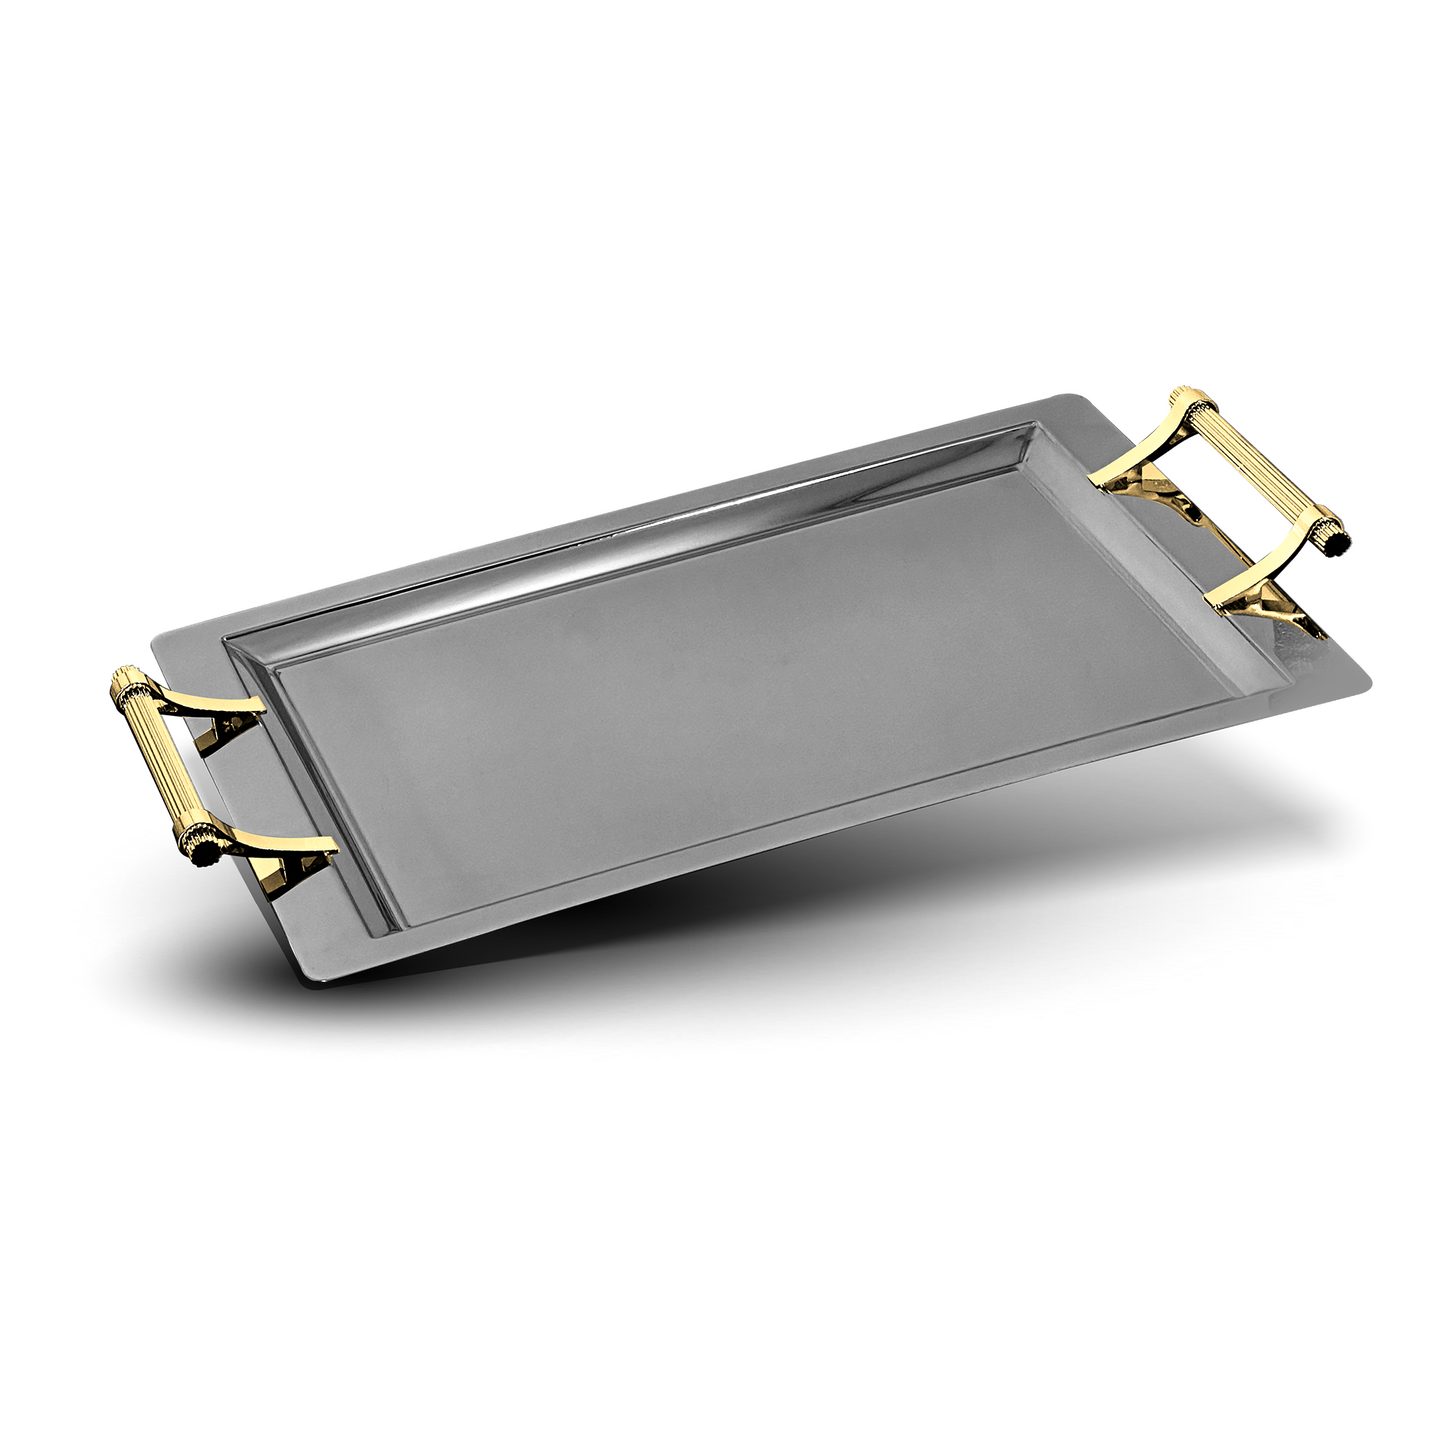 Dorsch Caesar Silver Serving Tray - Gold handles